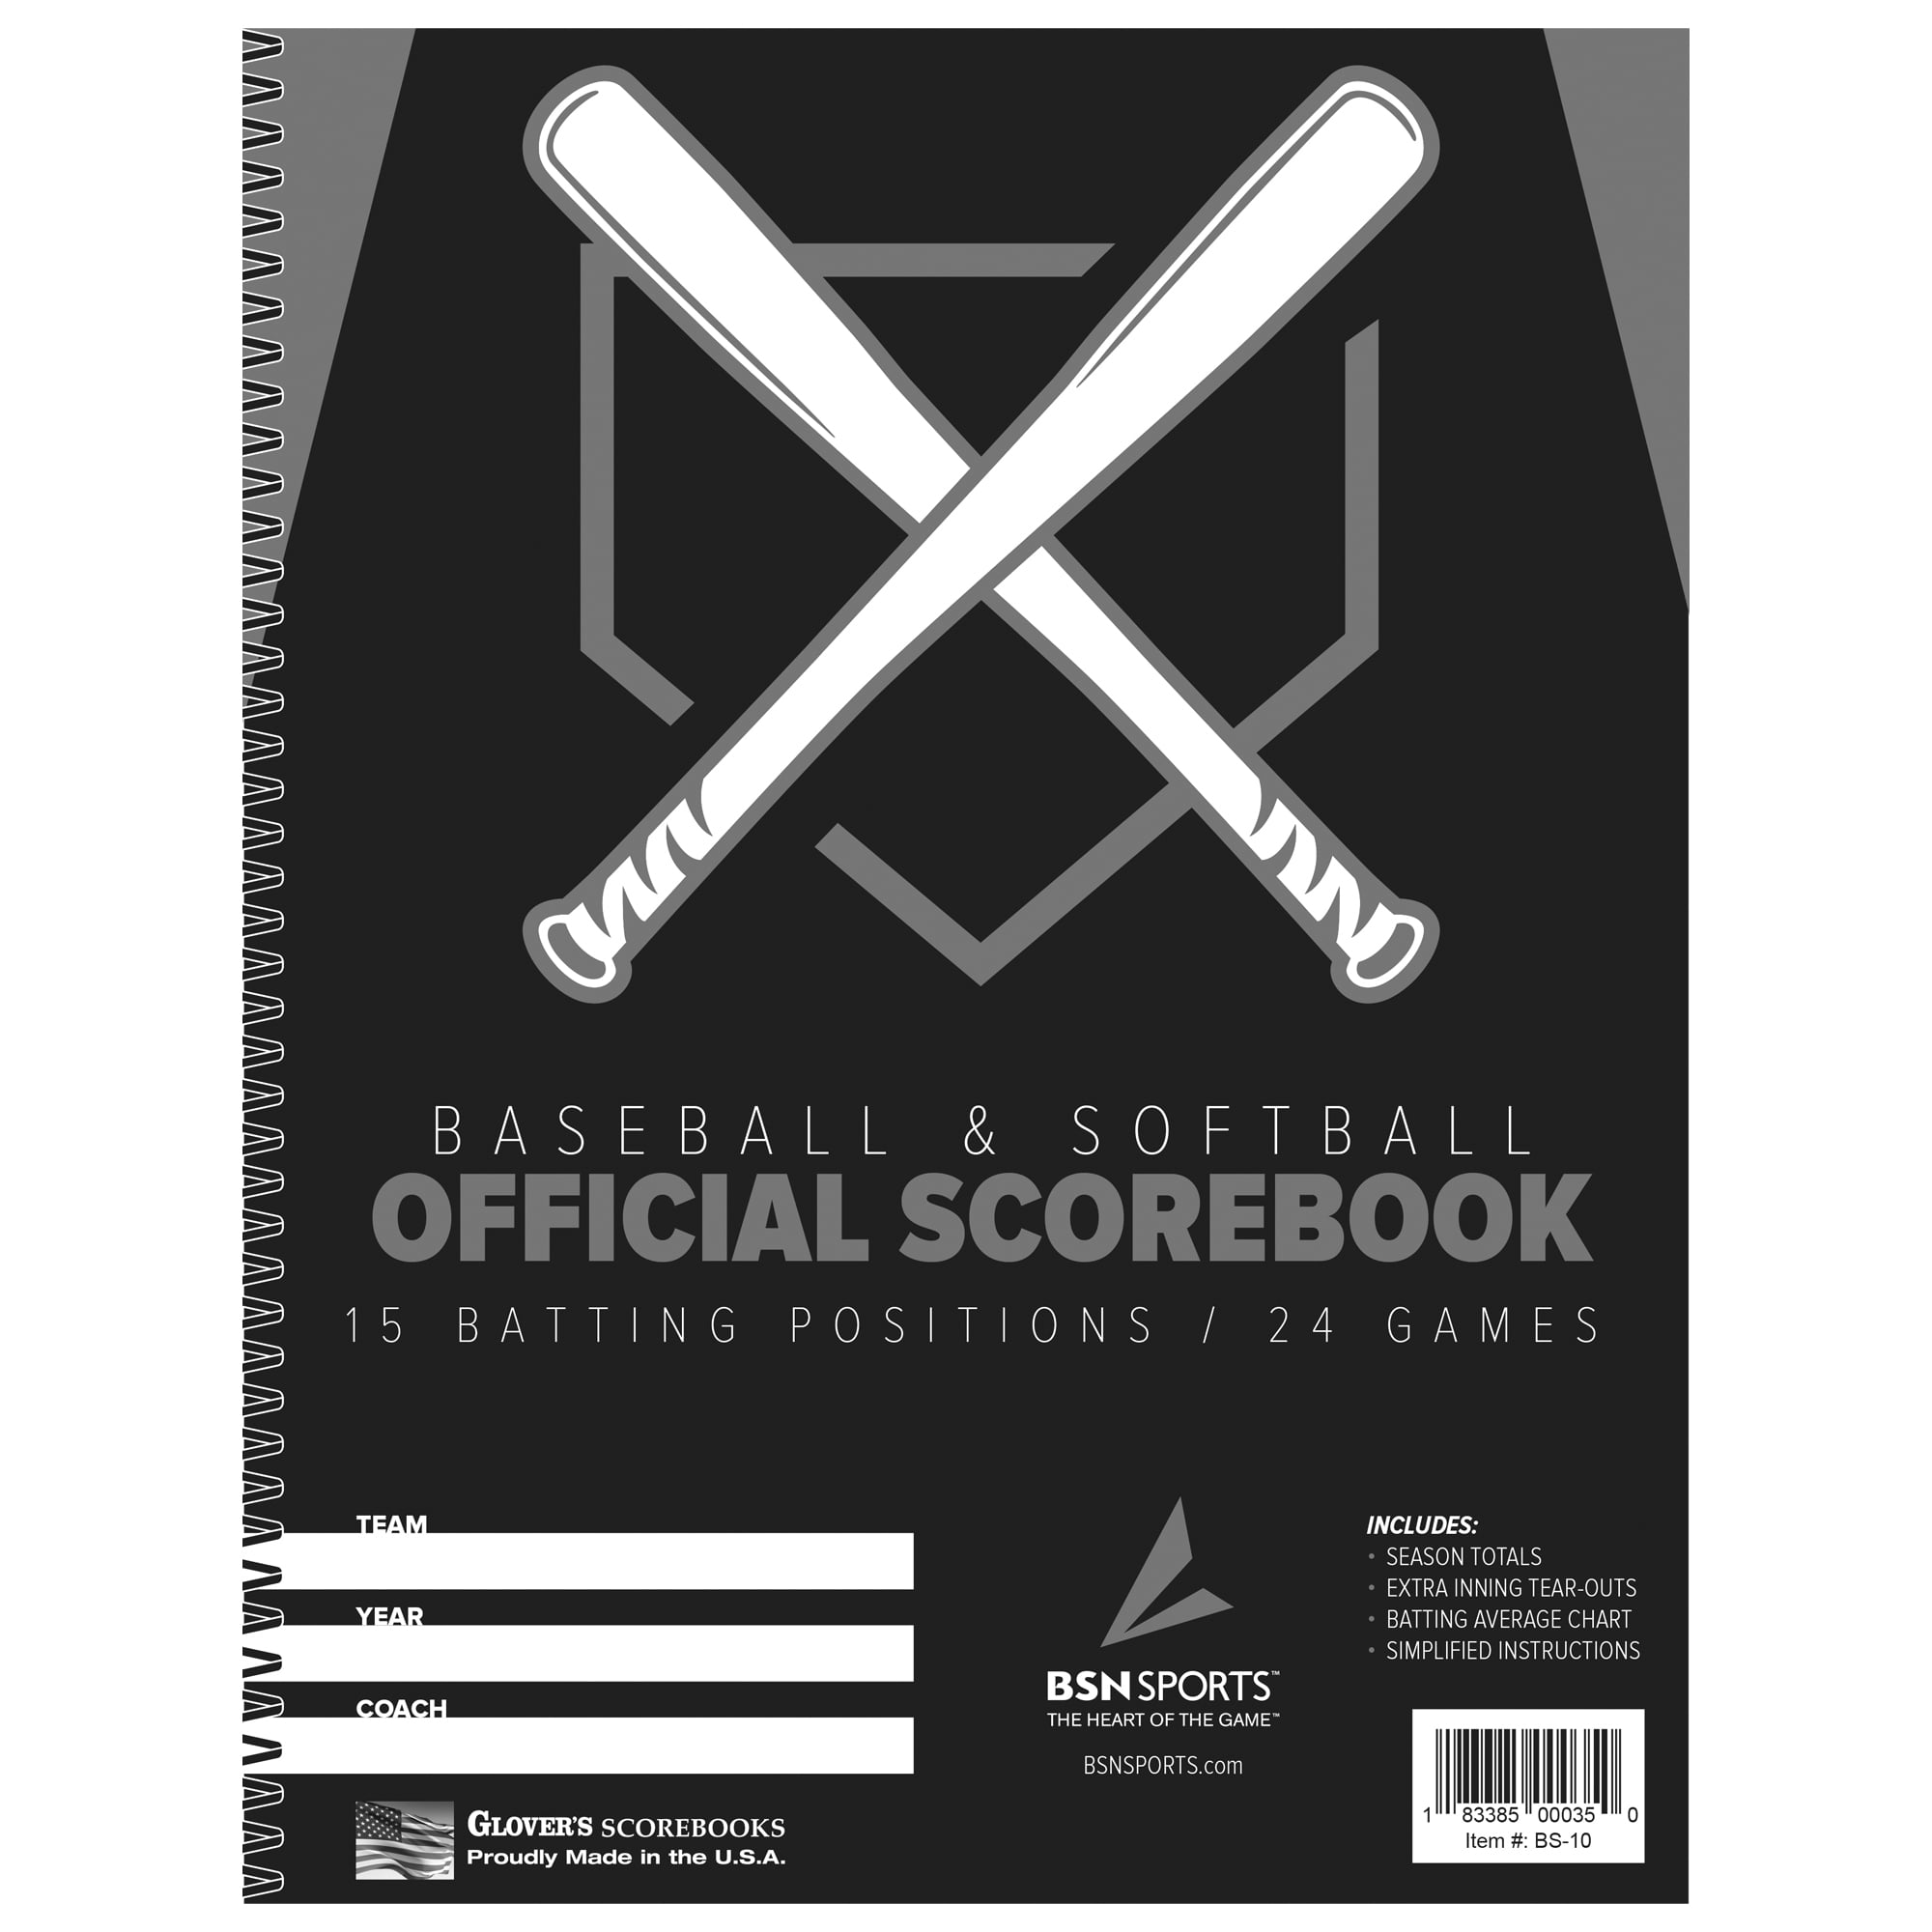 Champro Baseball & Softball Scorebook 26 game booklet lot of 2 